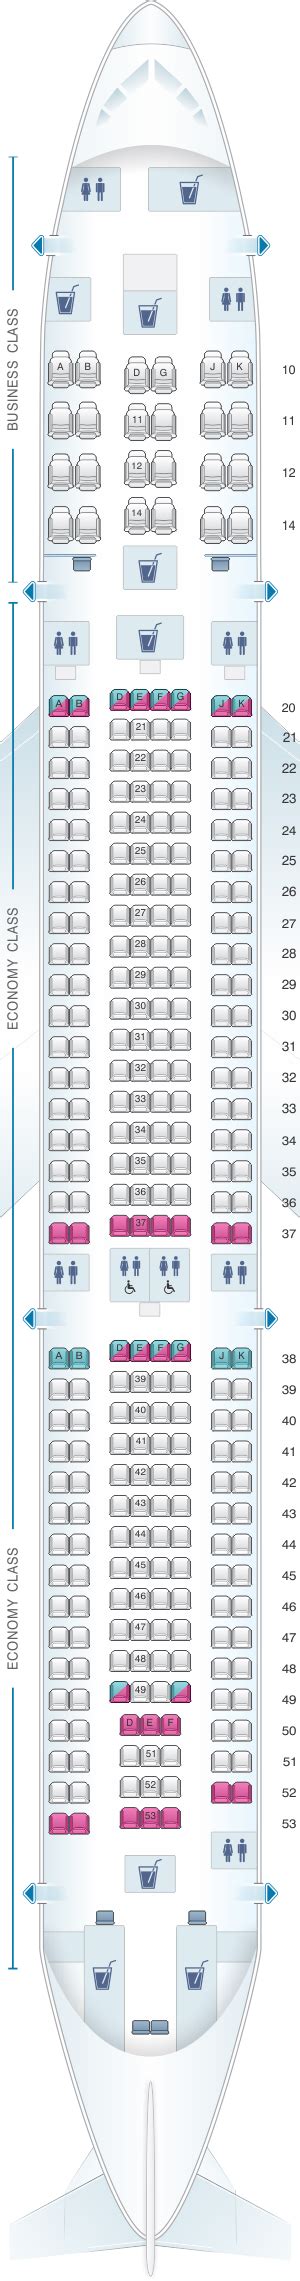 Seat Map Oman Air Airbus A330 300 V1 Seatmaestro